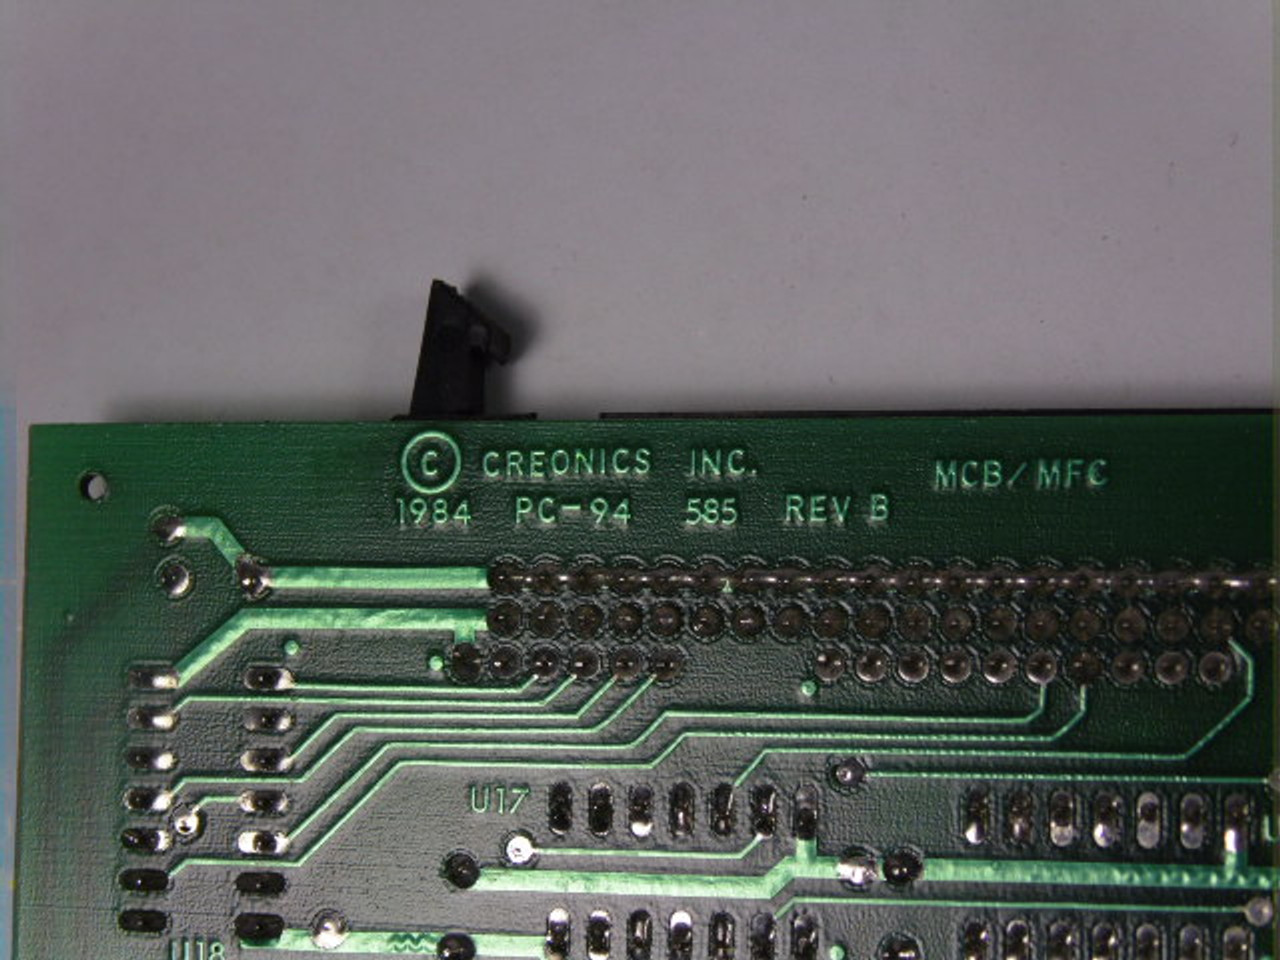 Creonics PC-94-585 PC Board USED